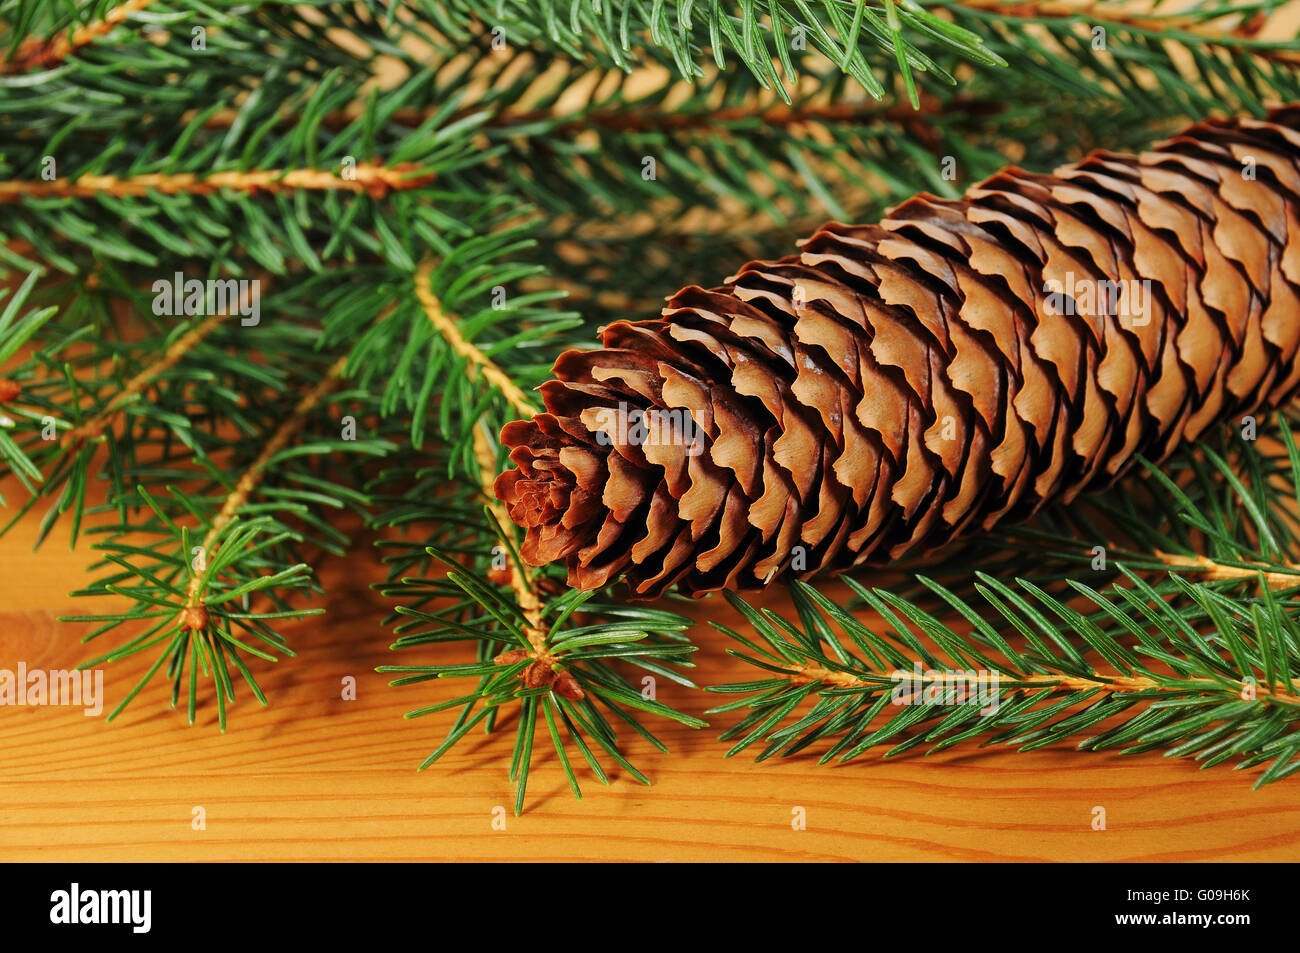 advent season decoration with fir tree branch Stock Photo - Alamy